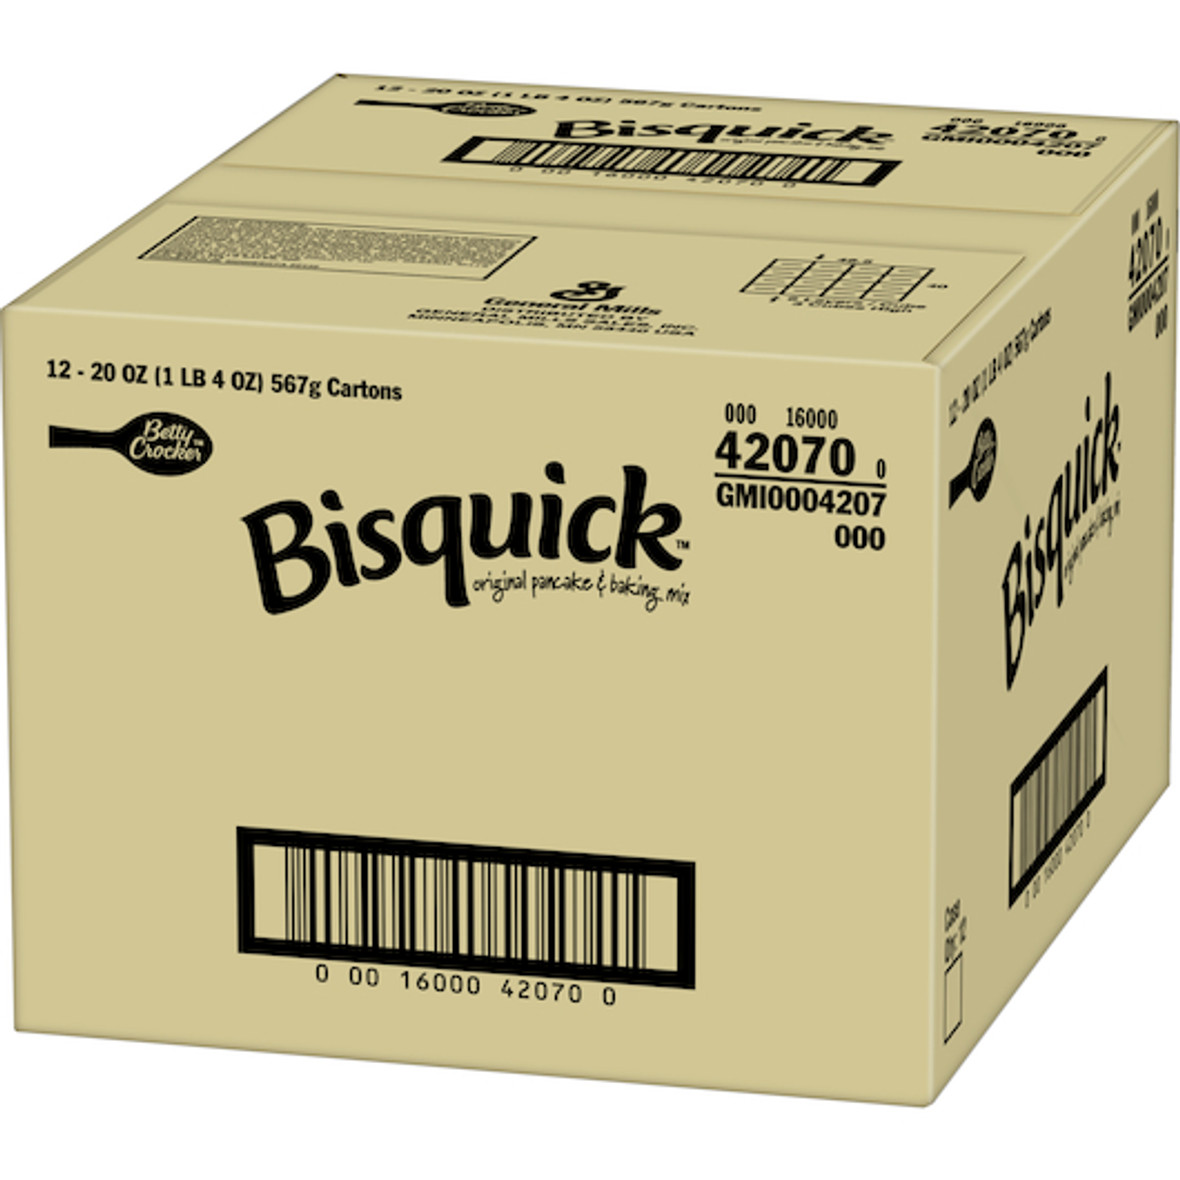 Bisquick Original Pancake and Baking Mix, 20 Ounce , 12 Per Case